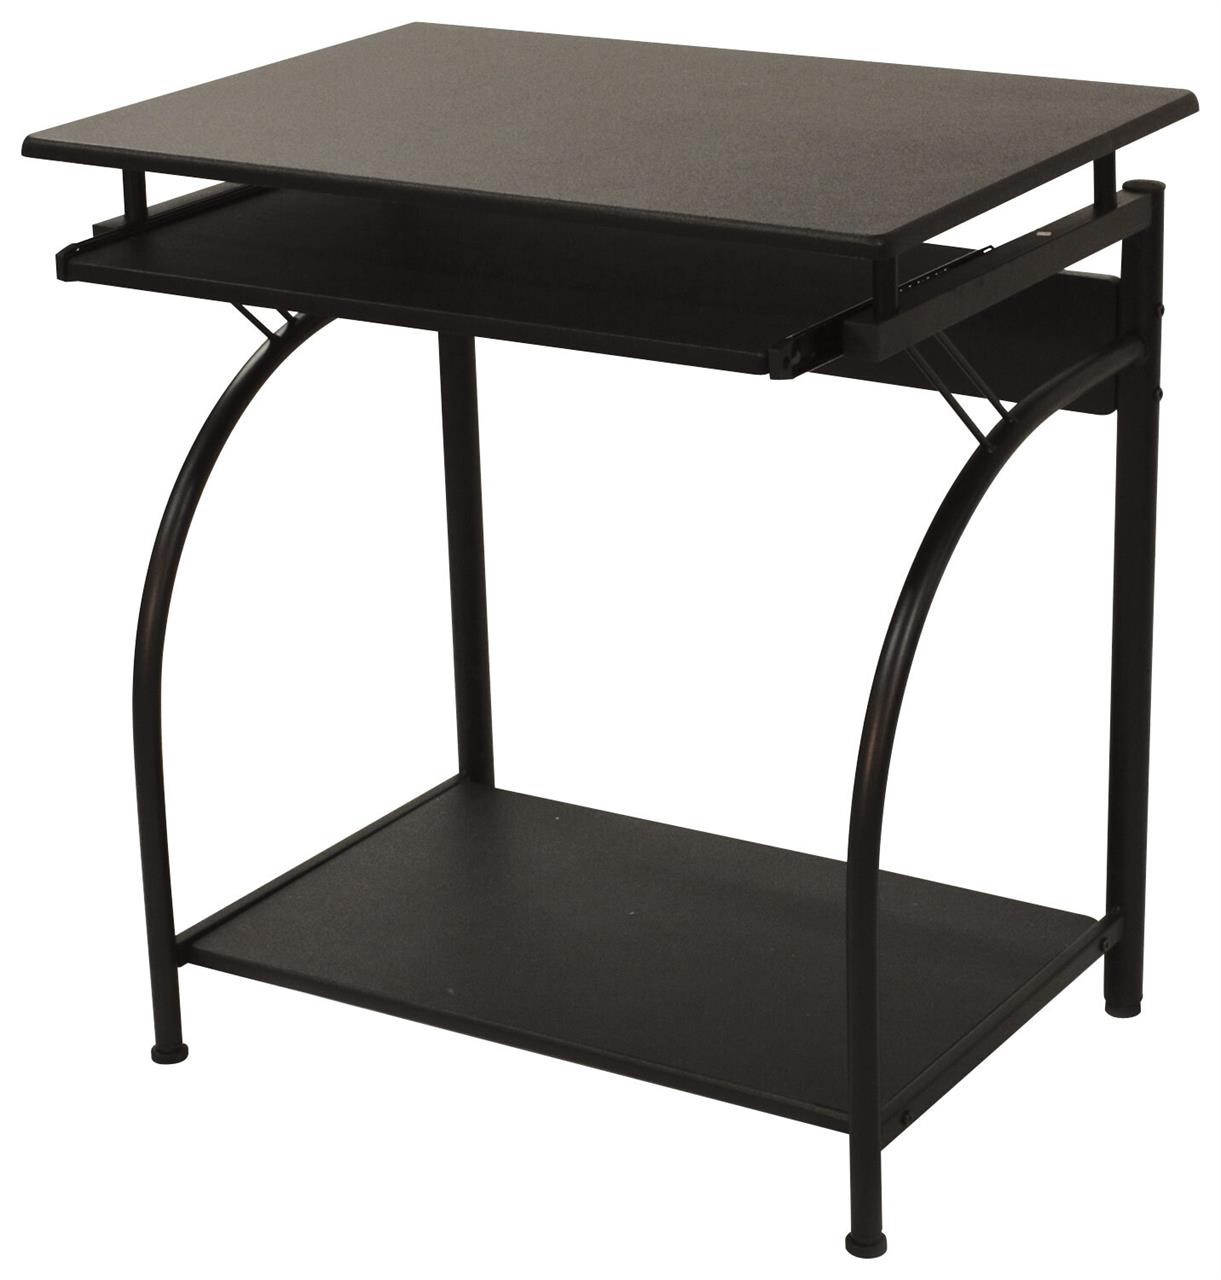 $80  Comfort Products Inc. - Stanton Computer Desk